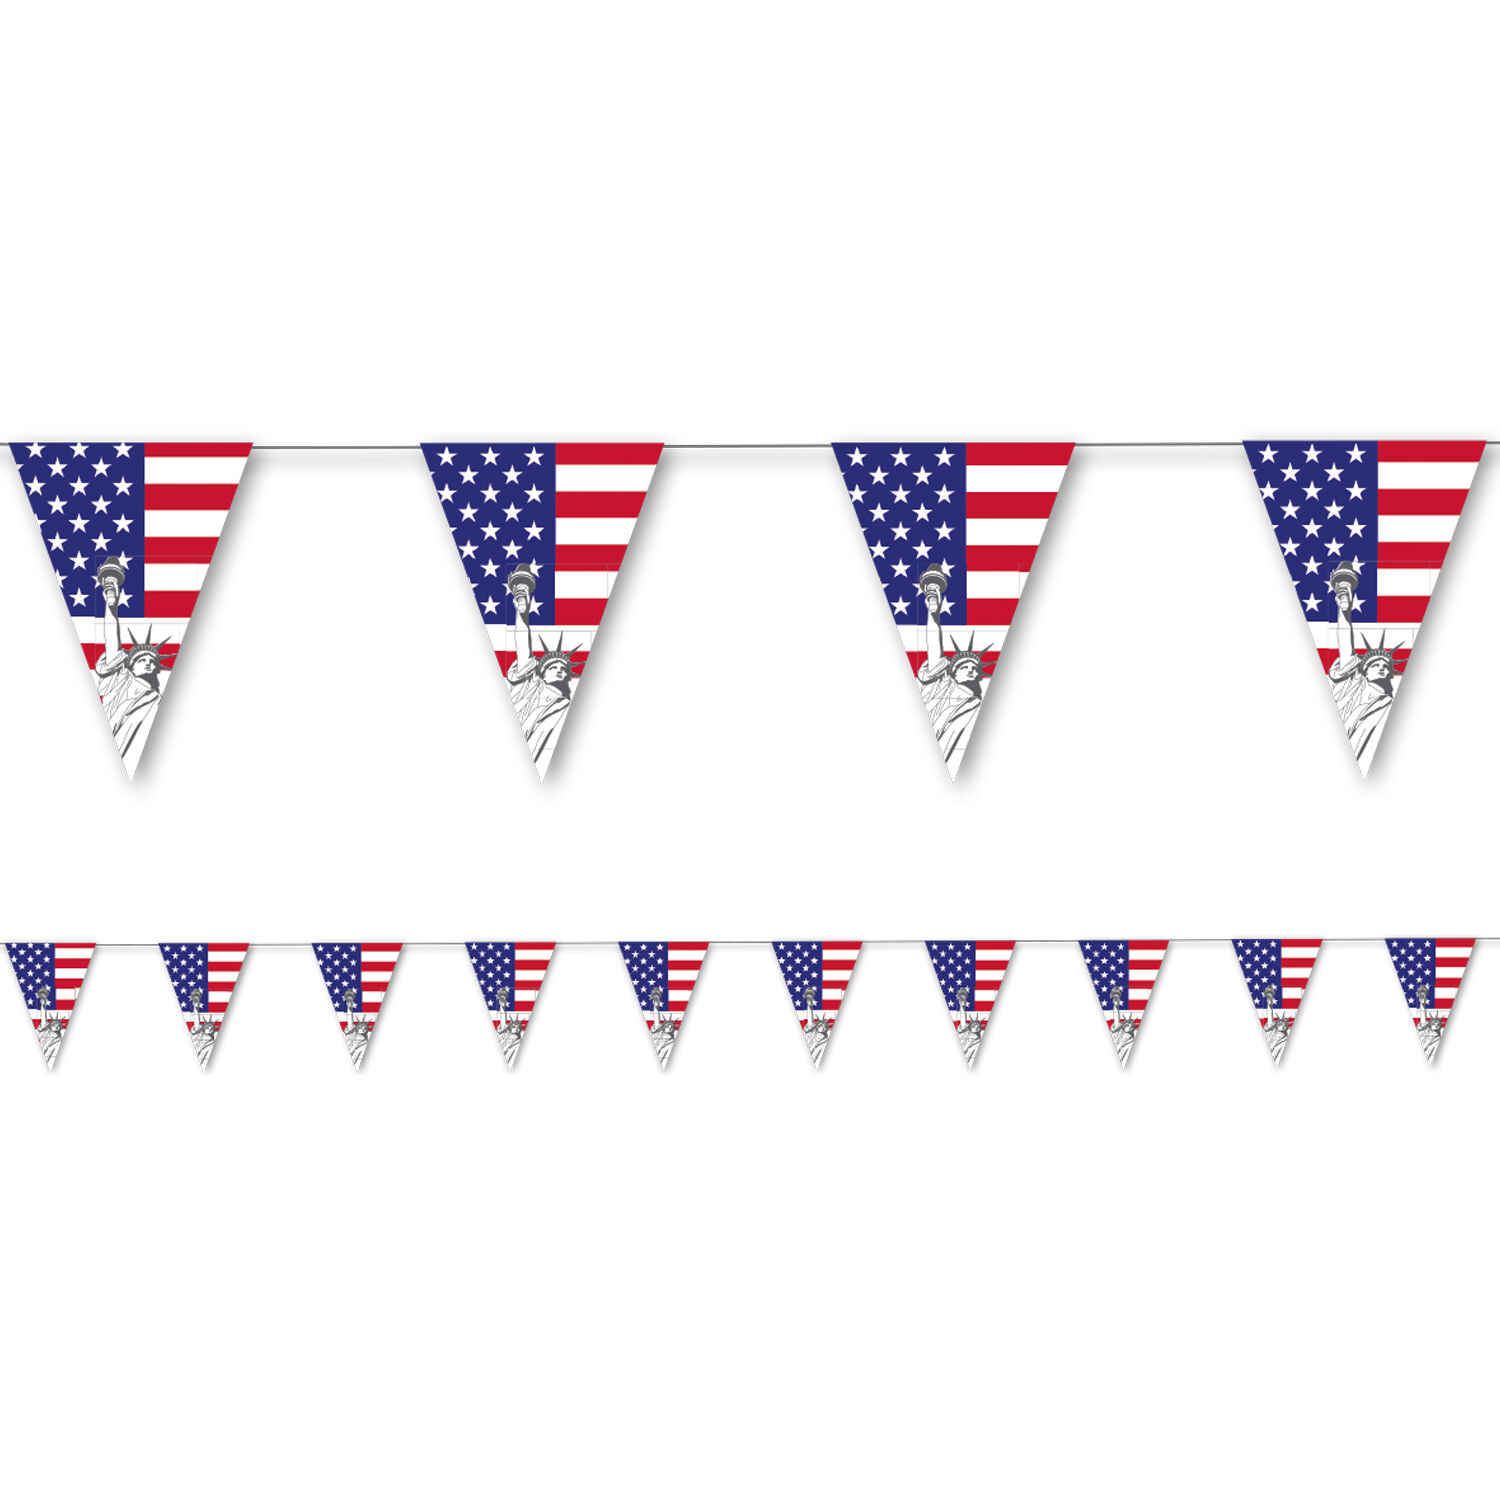 NEU Wimpelkette USA / Amerika aus Papier, 3,5m lang, 10 Flaggen, 20x30 cm